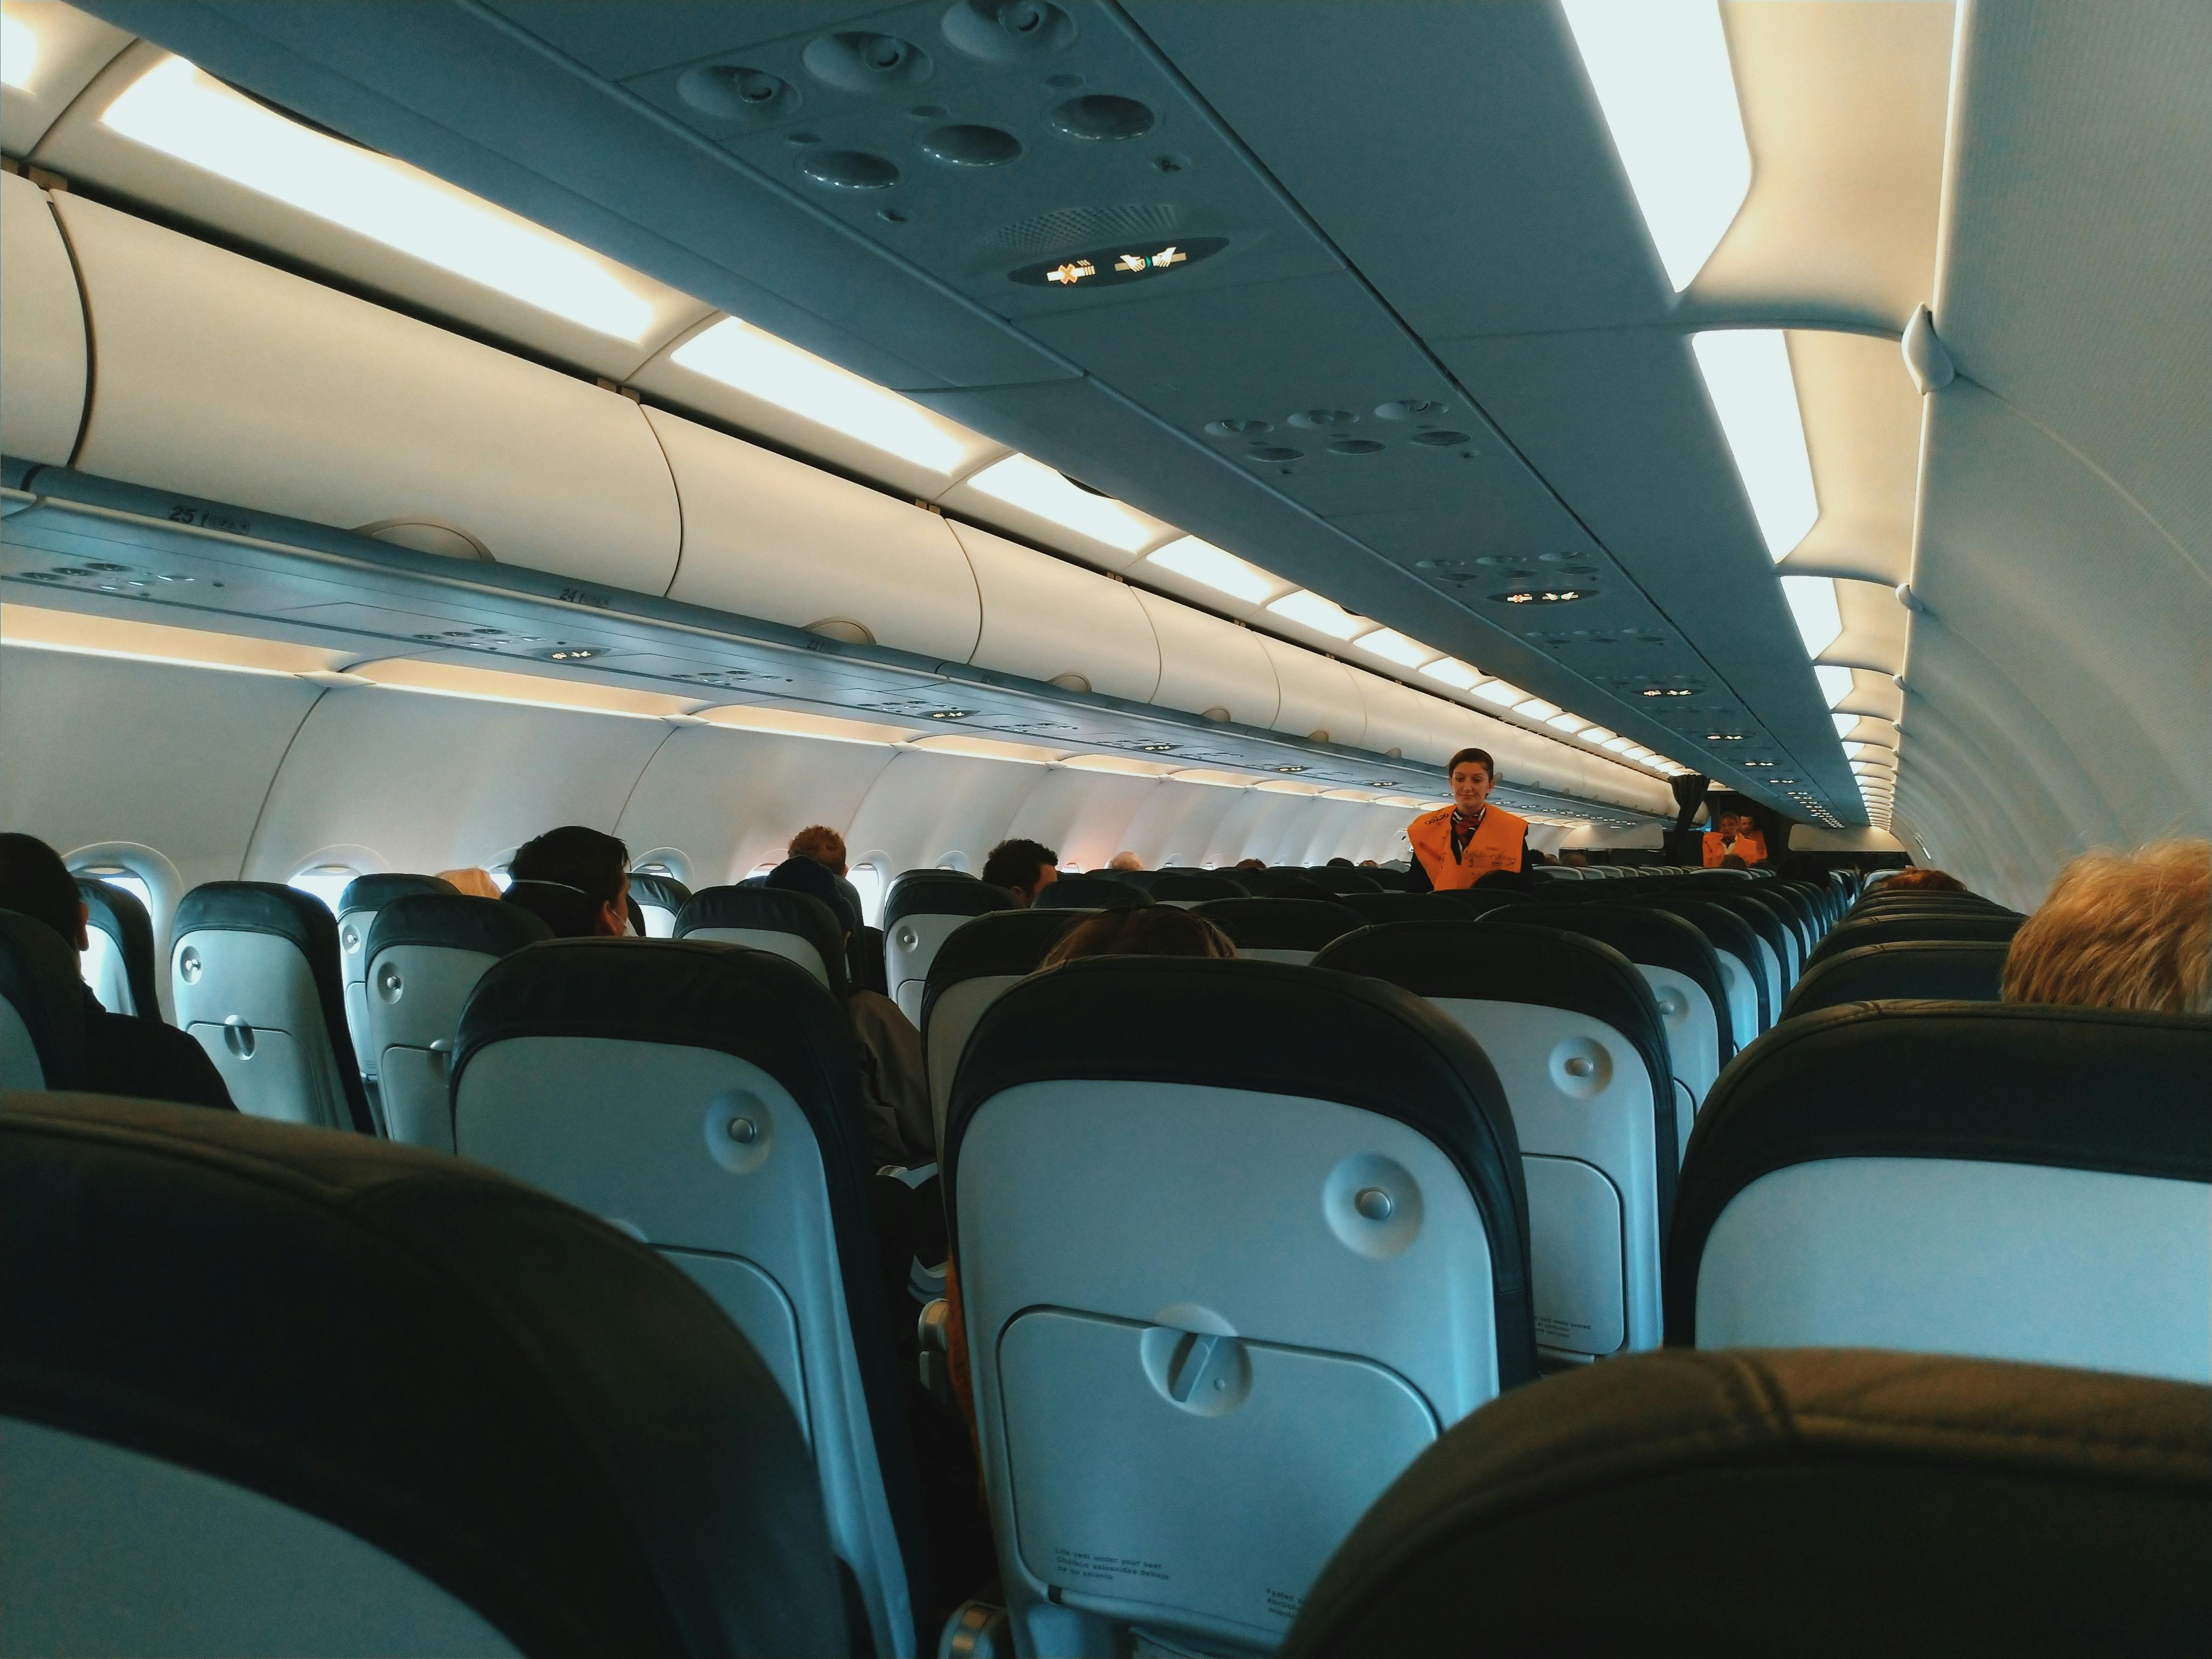 A flight attendant walking on a plane | Source: Pexels